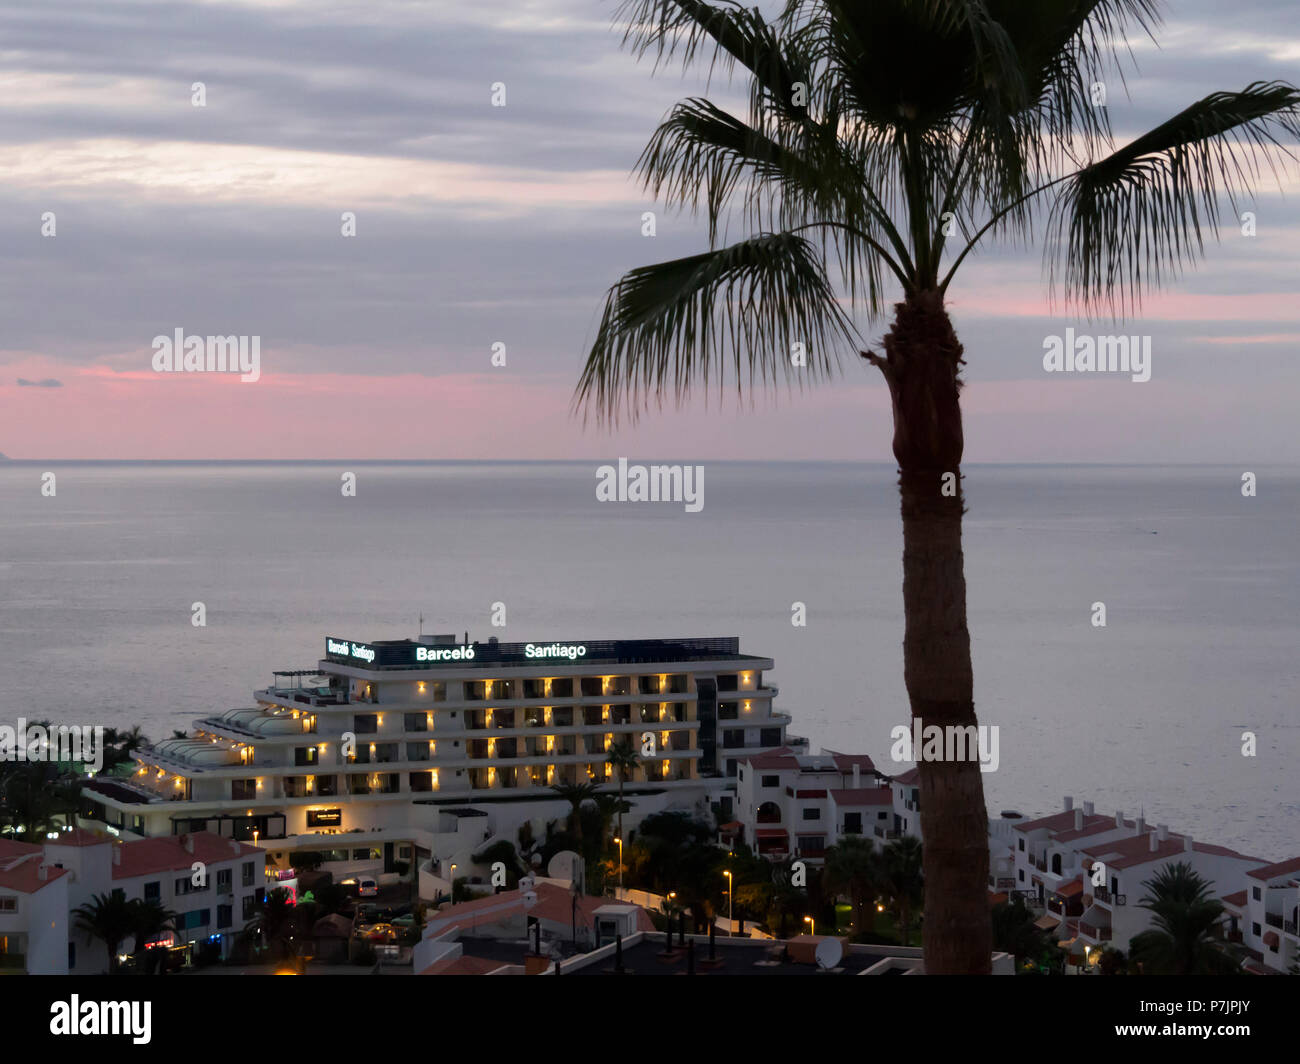 Tenerife, Canary Islands - Puerto Santiago. Barcelo Santiago hotel. Stock Photo